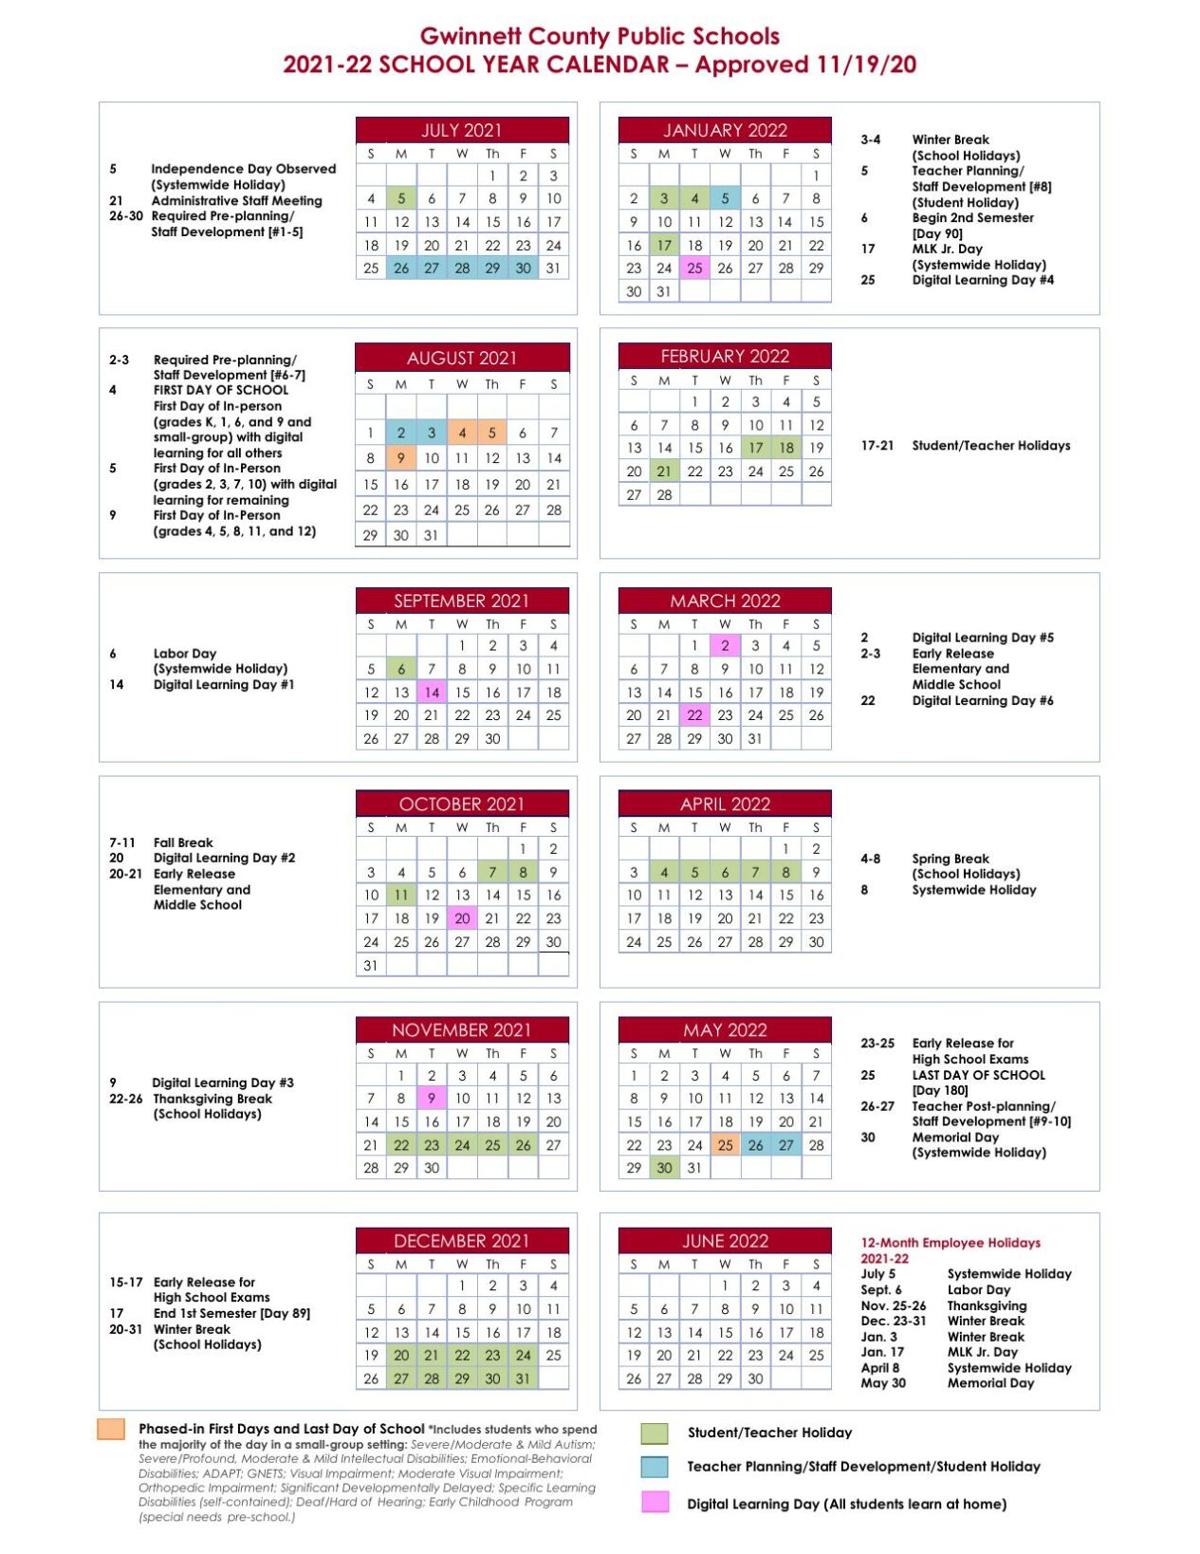 Gwinnett Calendar 2022 Gwinnett County Public Schools' 2021-2022 School Year Calendar | |  Gwinnettdailypost.com